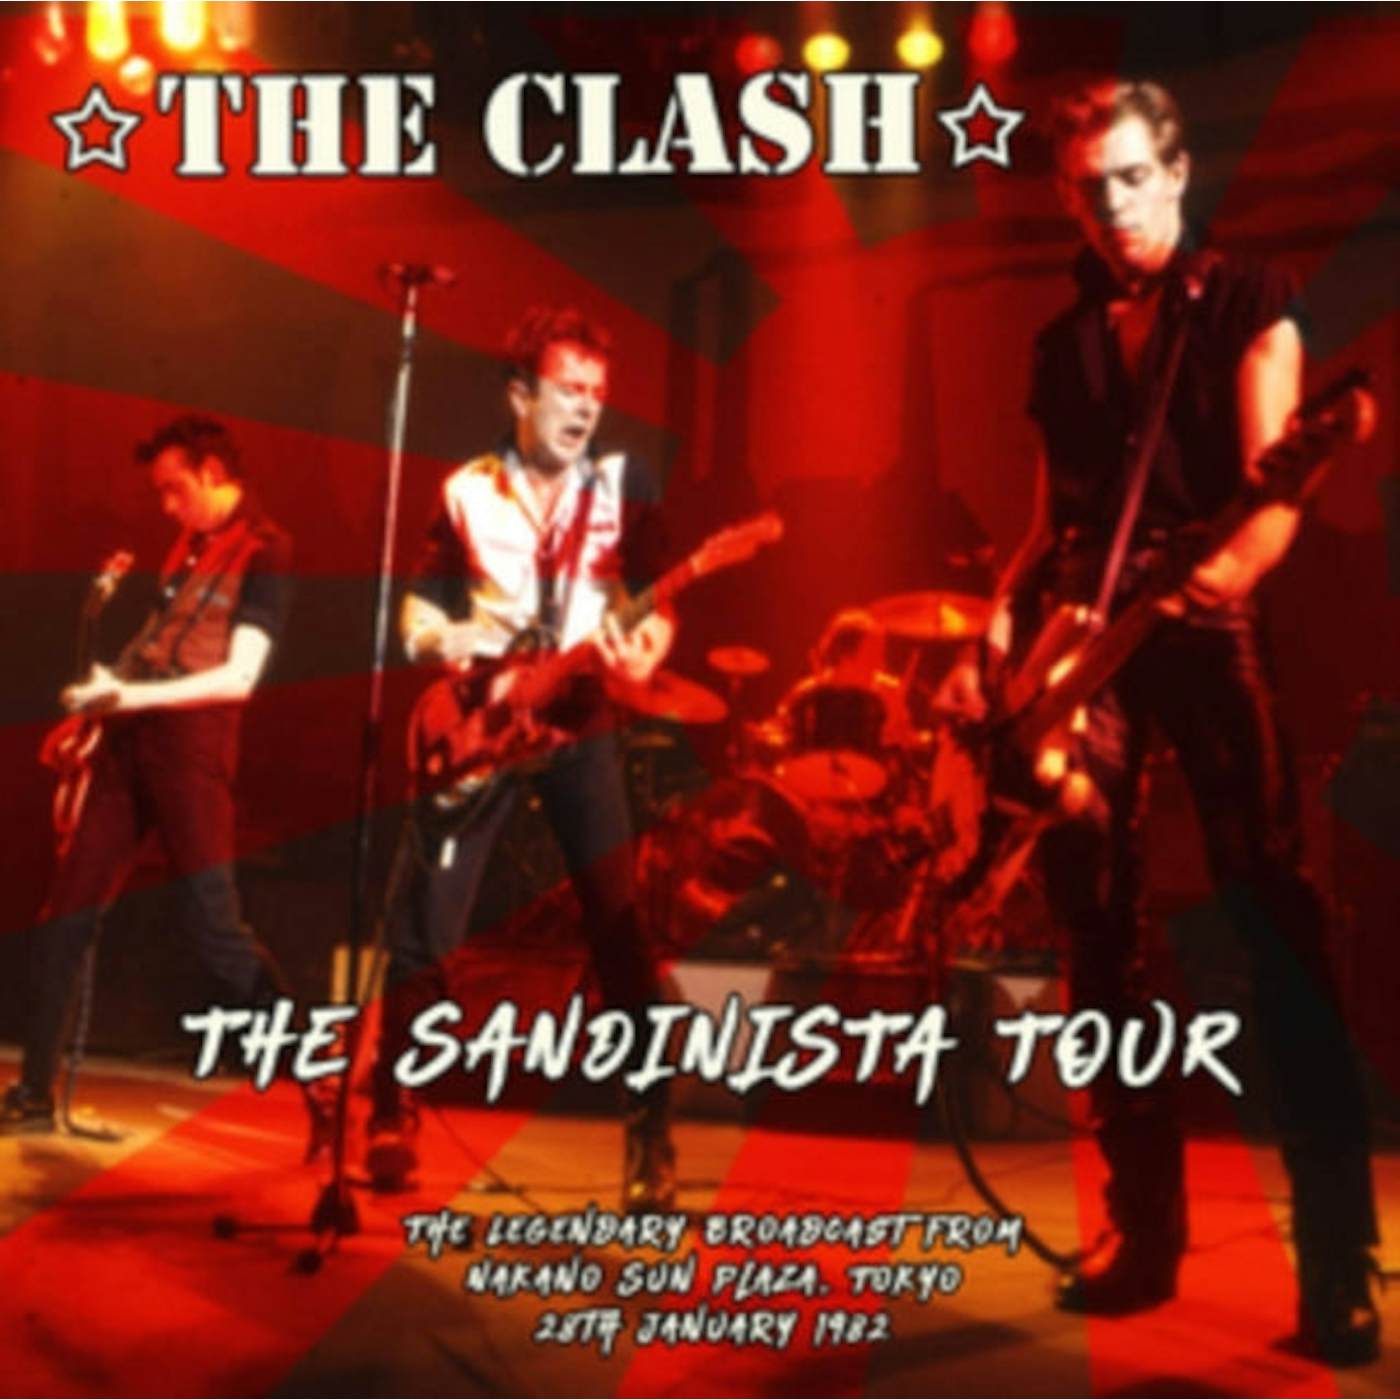 The Clash CD - The Sandinista Tour